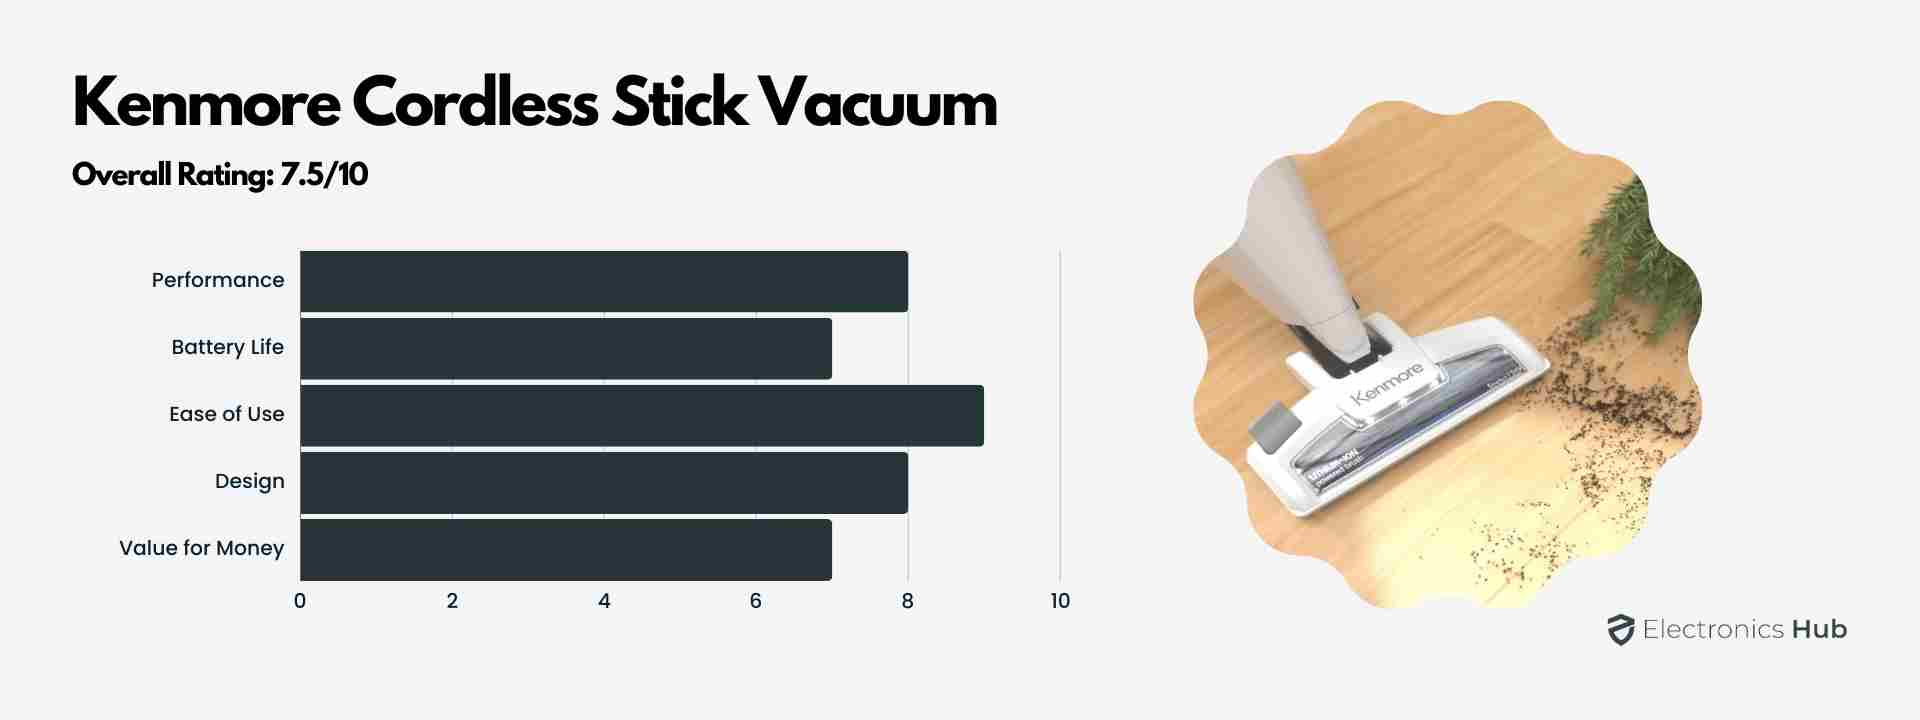 Kenmore Cordless Stick Vacuum